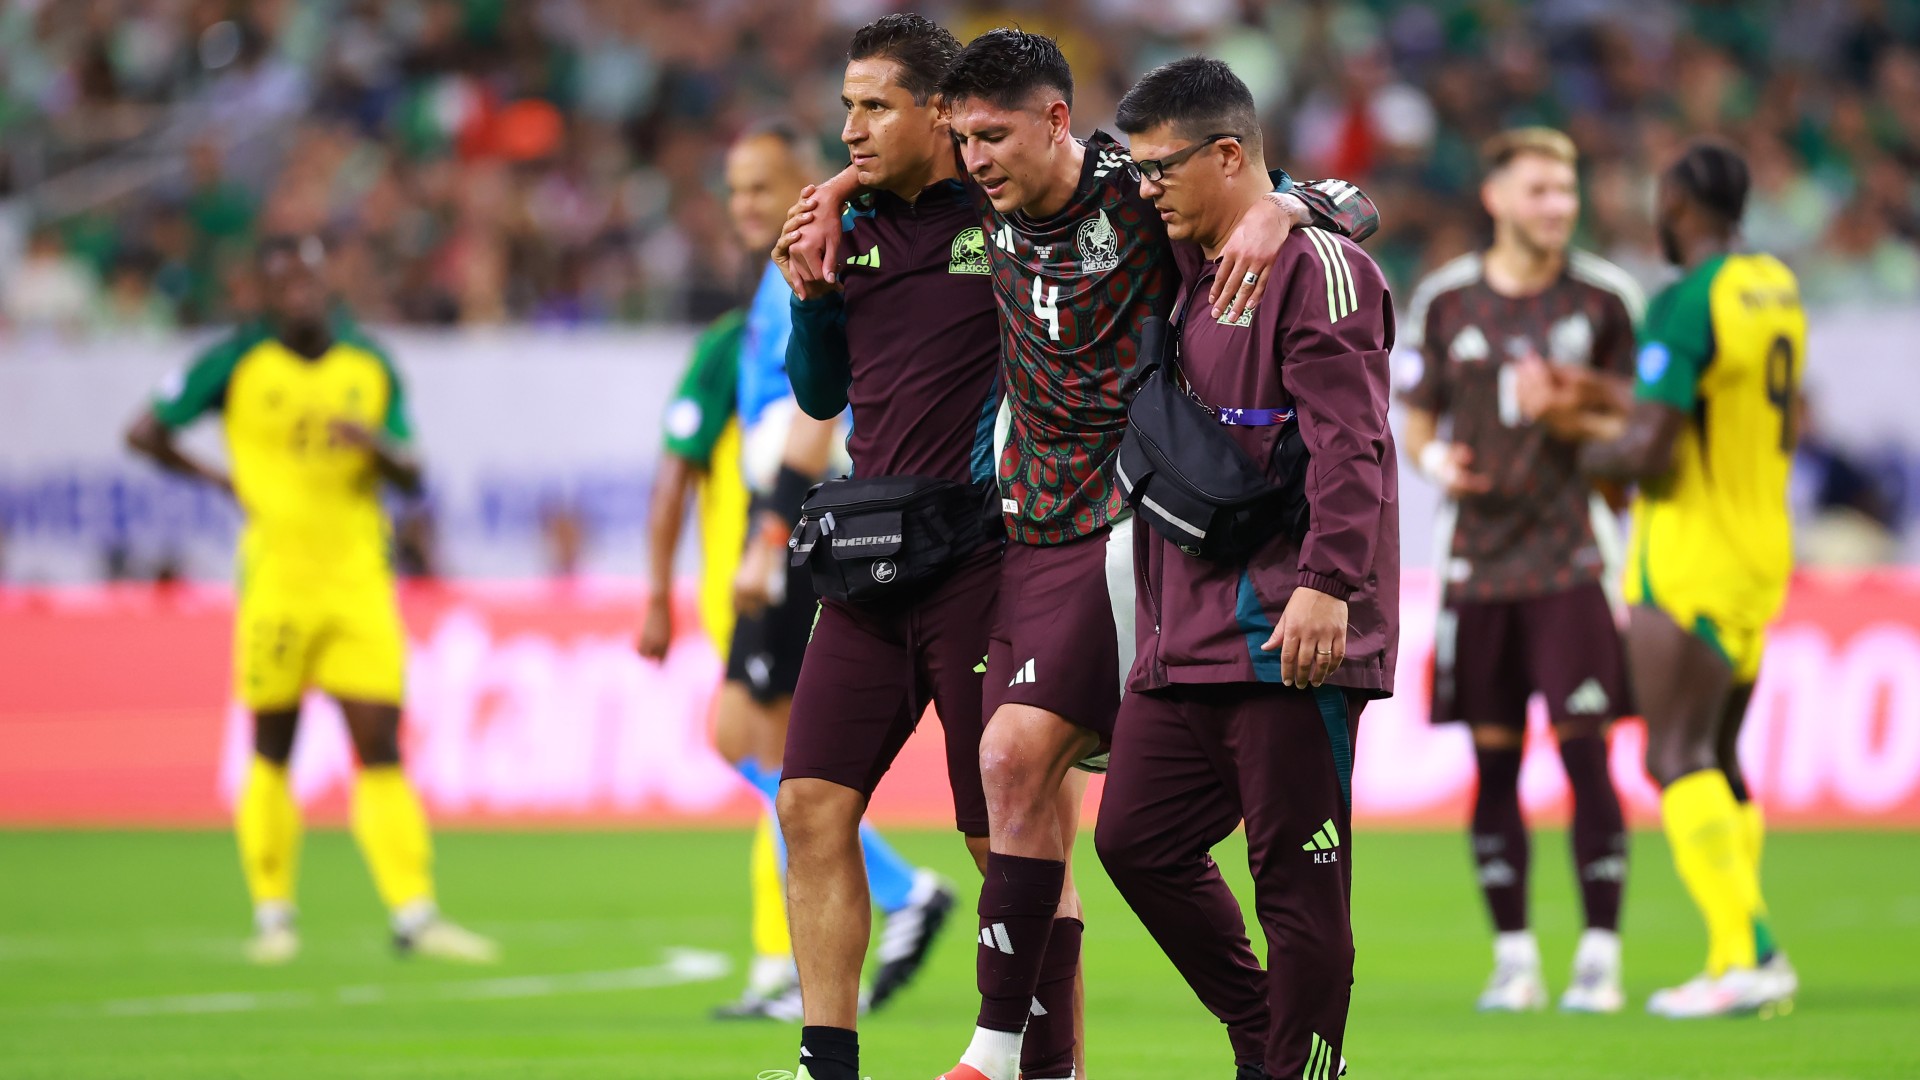 Injured Alvarez out of Copa America